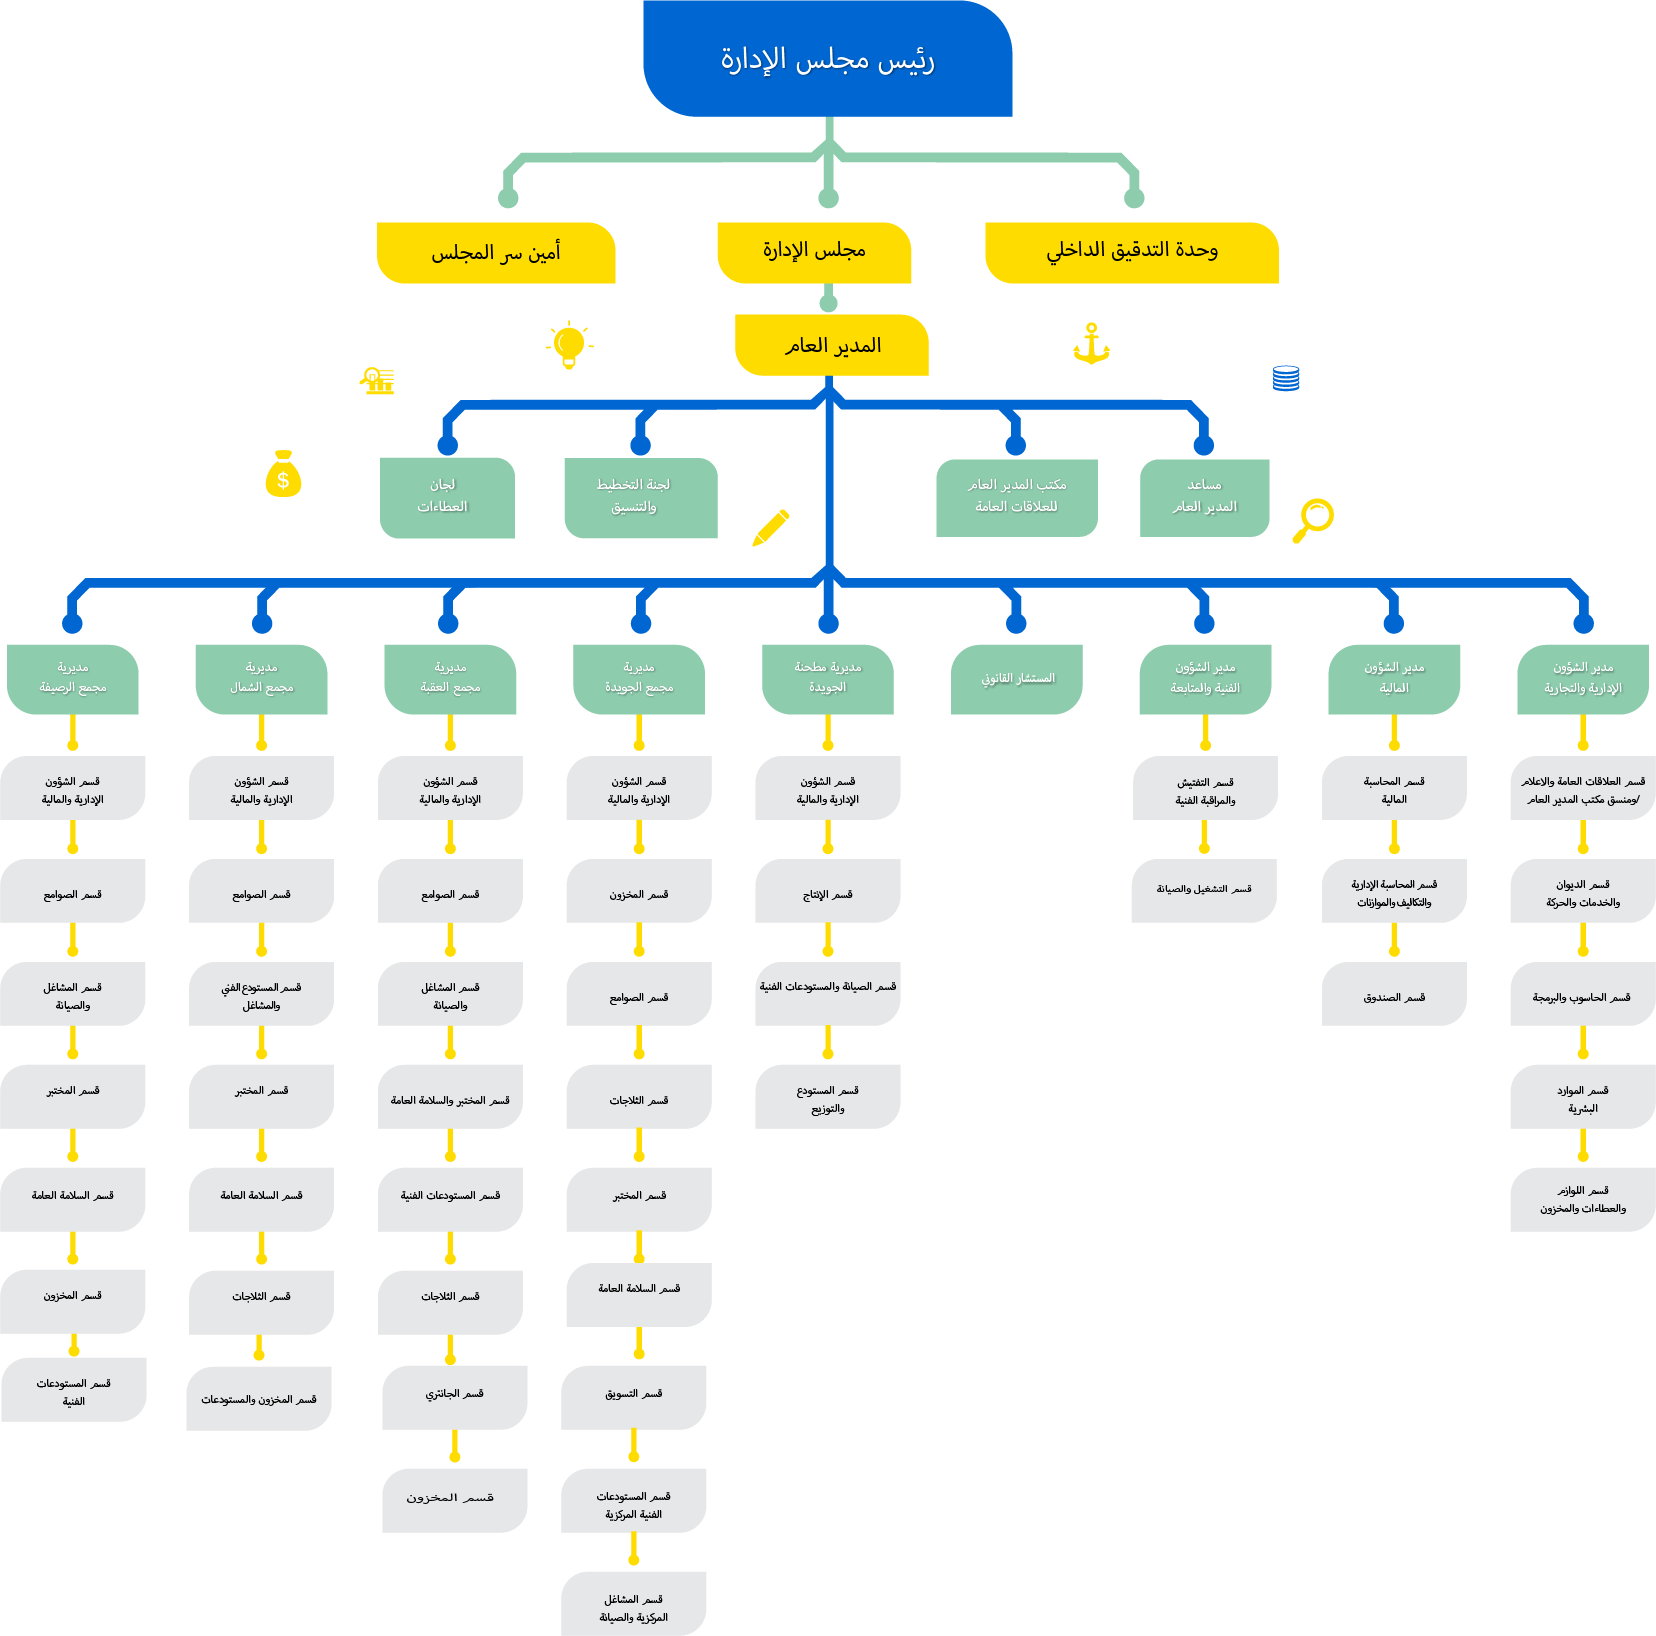 Administrative_organizational_Structure
